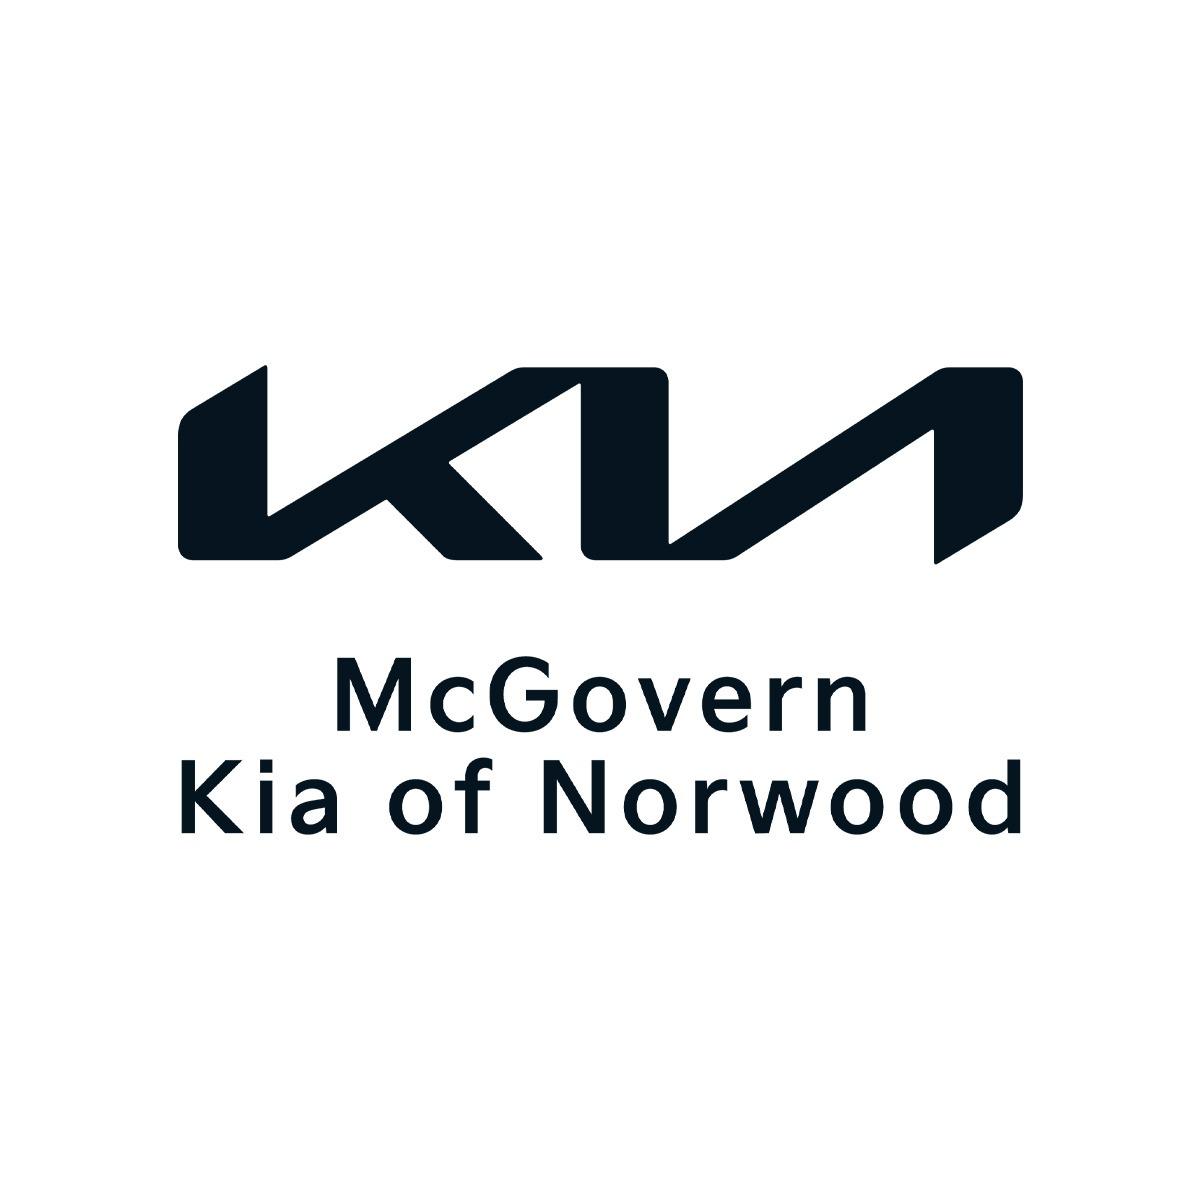 McGovern Kia of Norwood